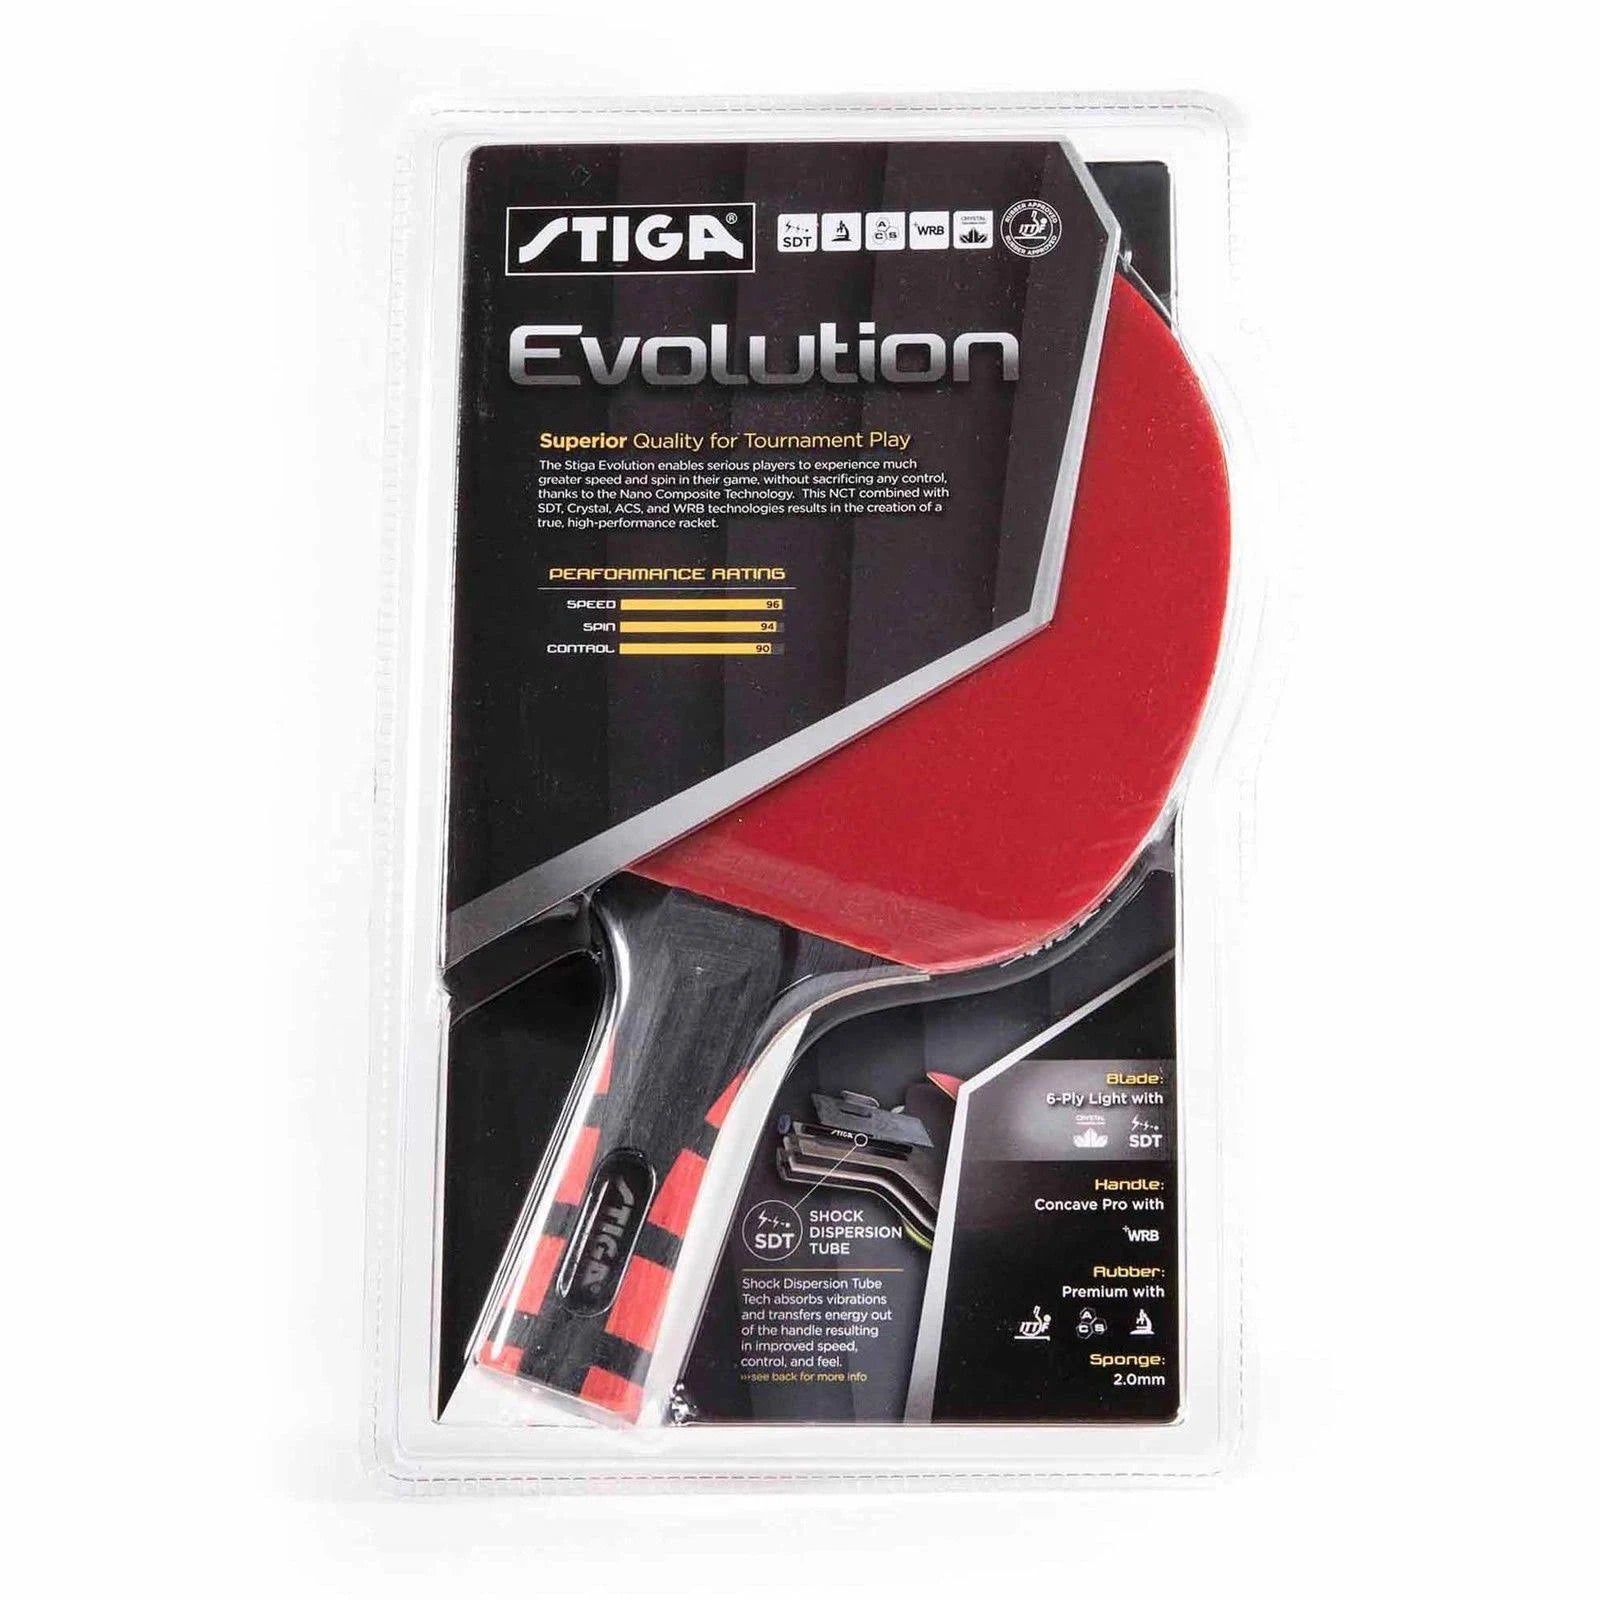 STIGA Evolution Performance-Level Table Tennis Racket